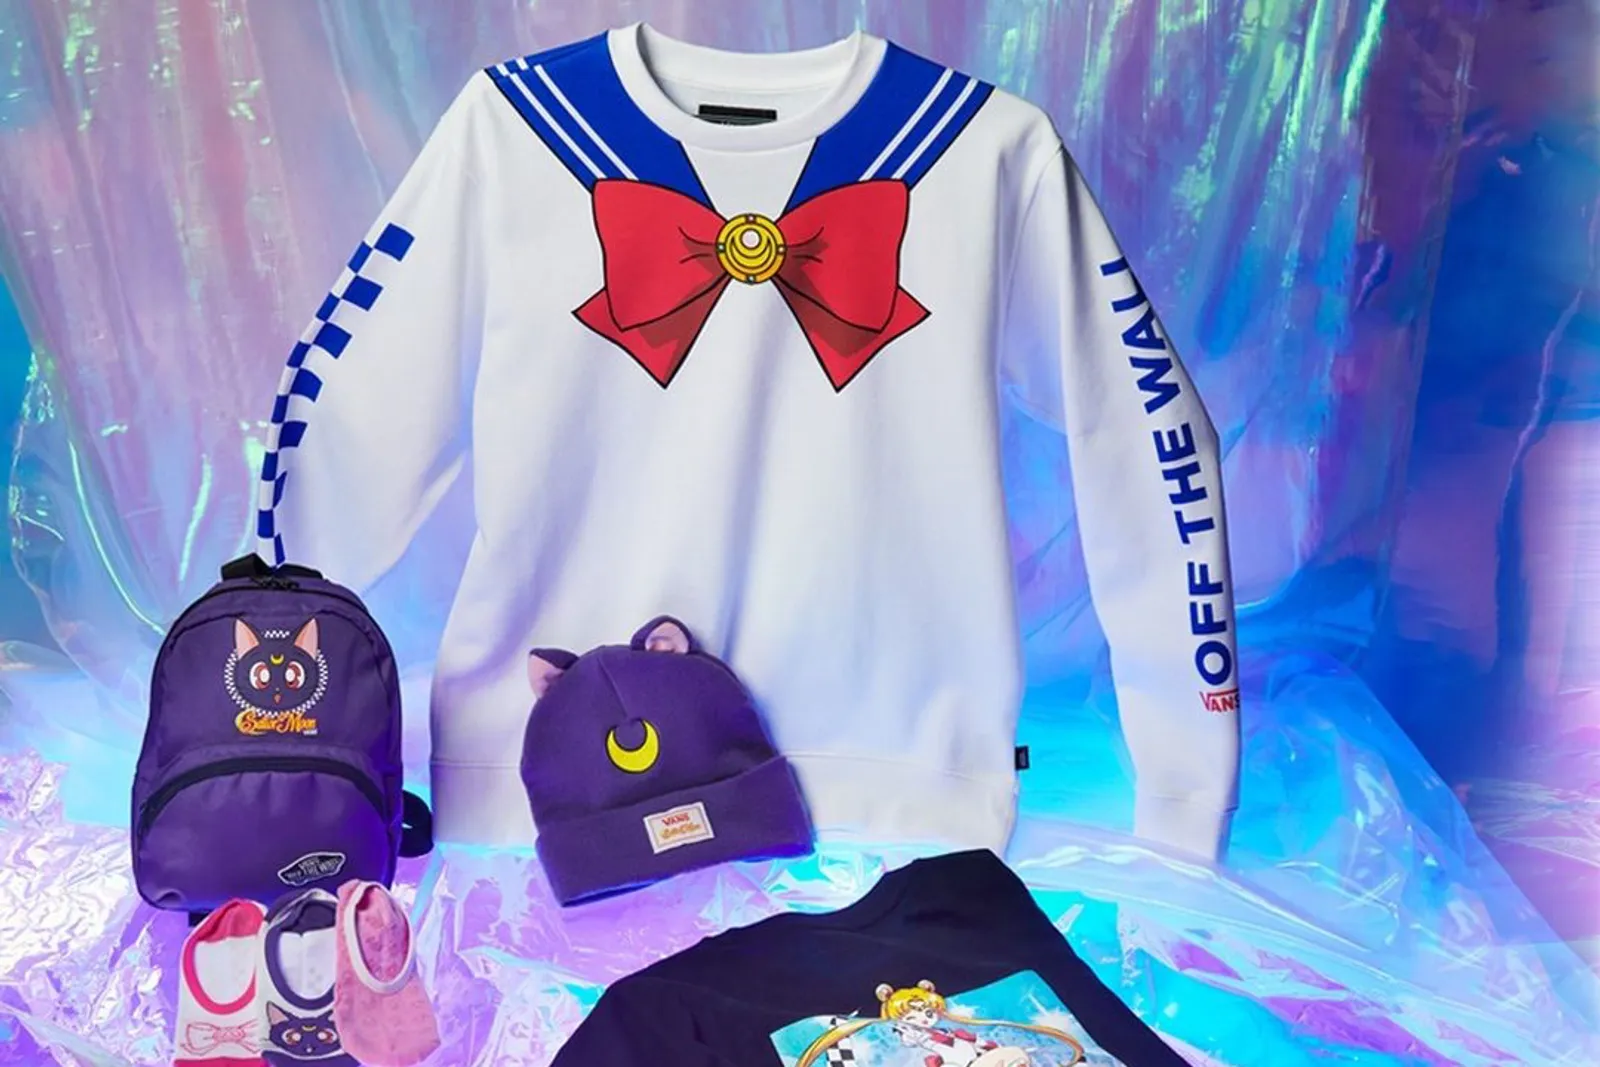 Intip Koleksi Gemas Vans dan Sailor Moon